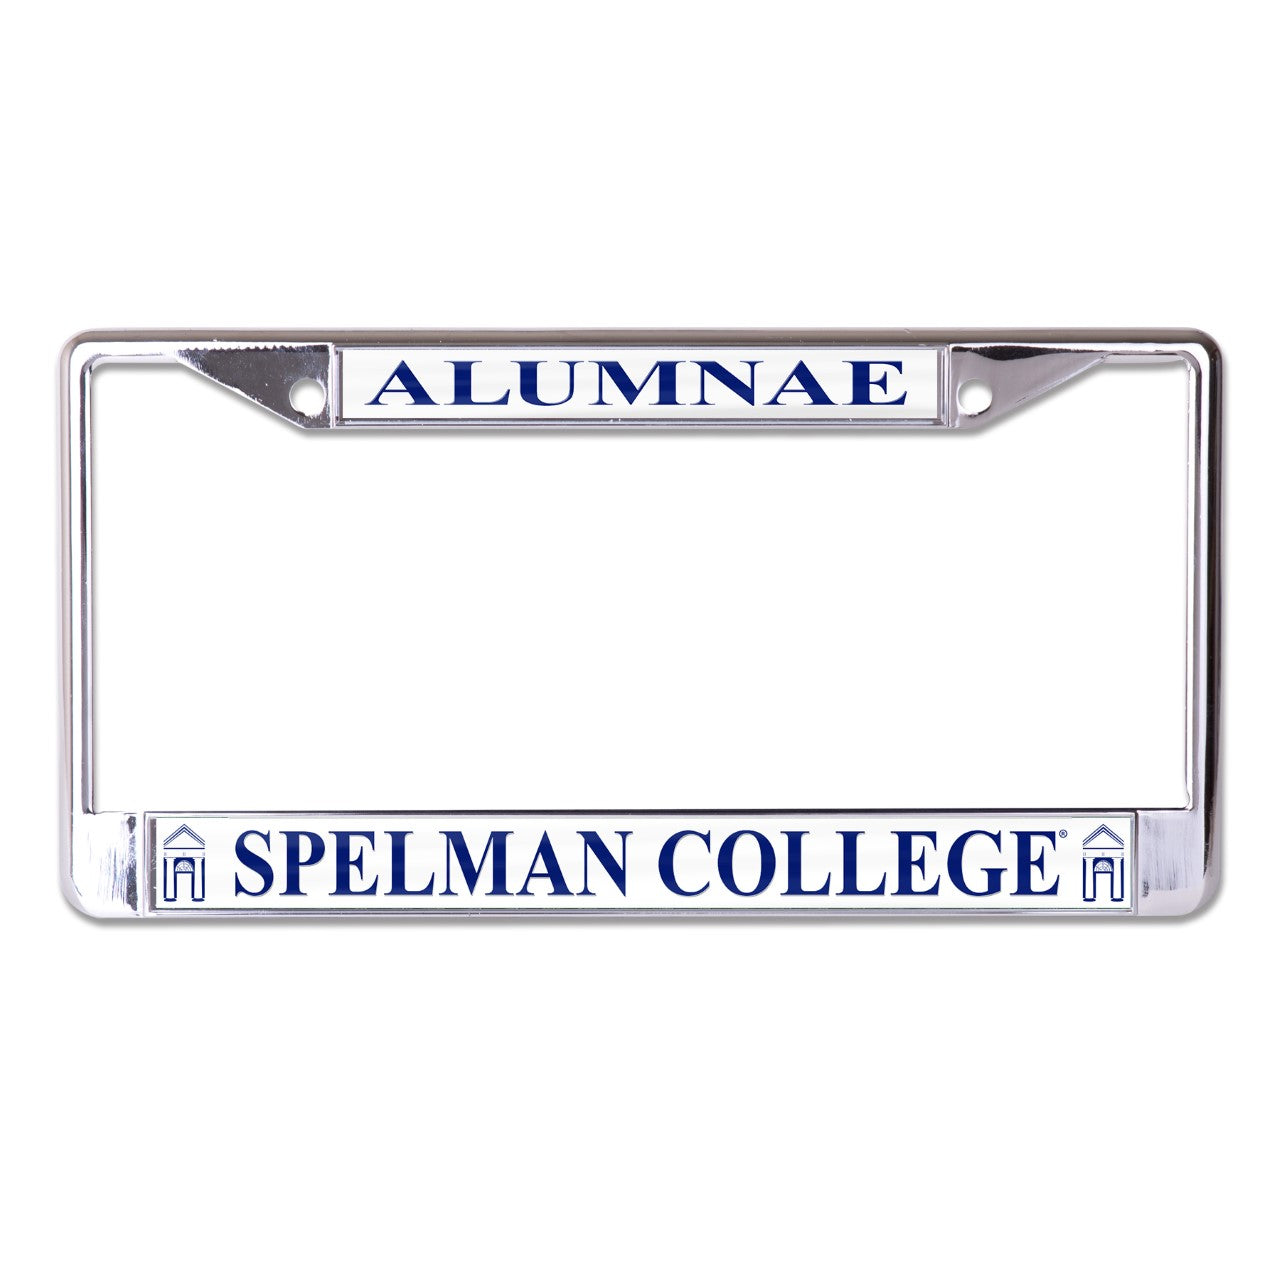 Spelman College Alumnae Chrome License Plate Frame